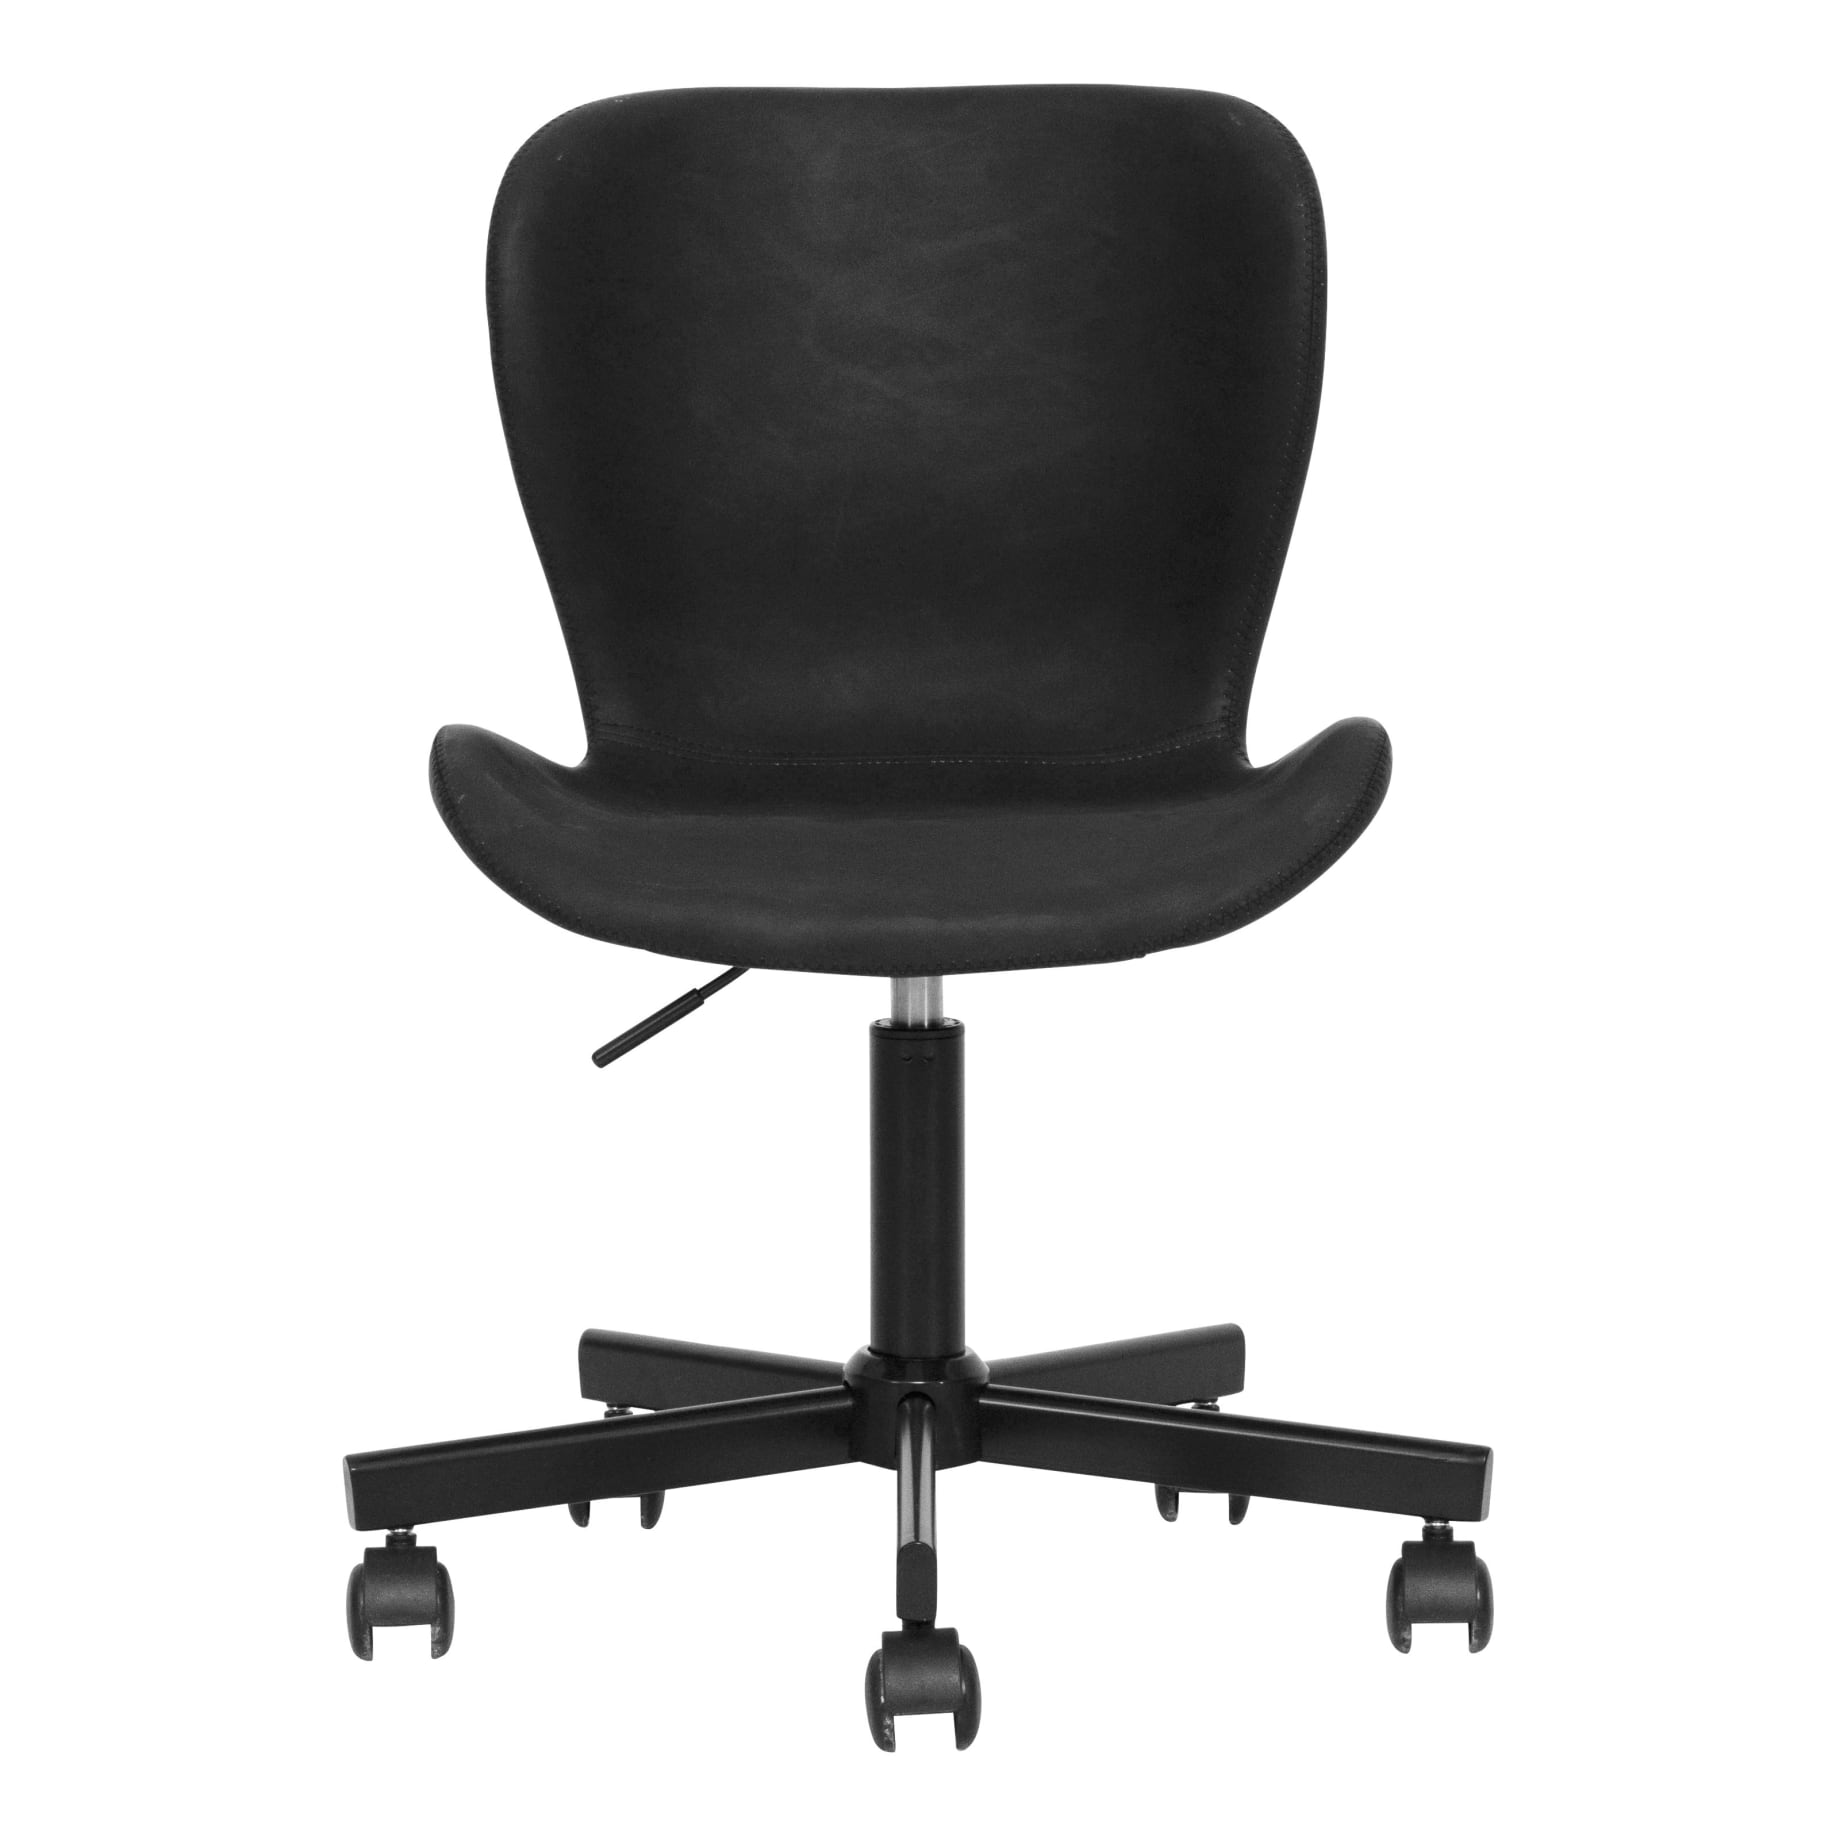 Batilda Desk Chair in Black PU/Black rollers